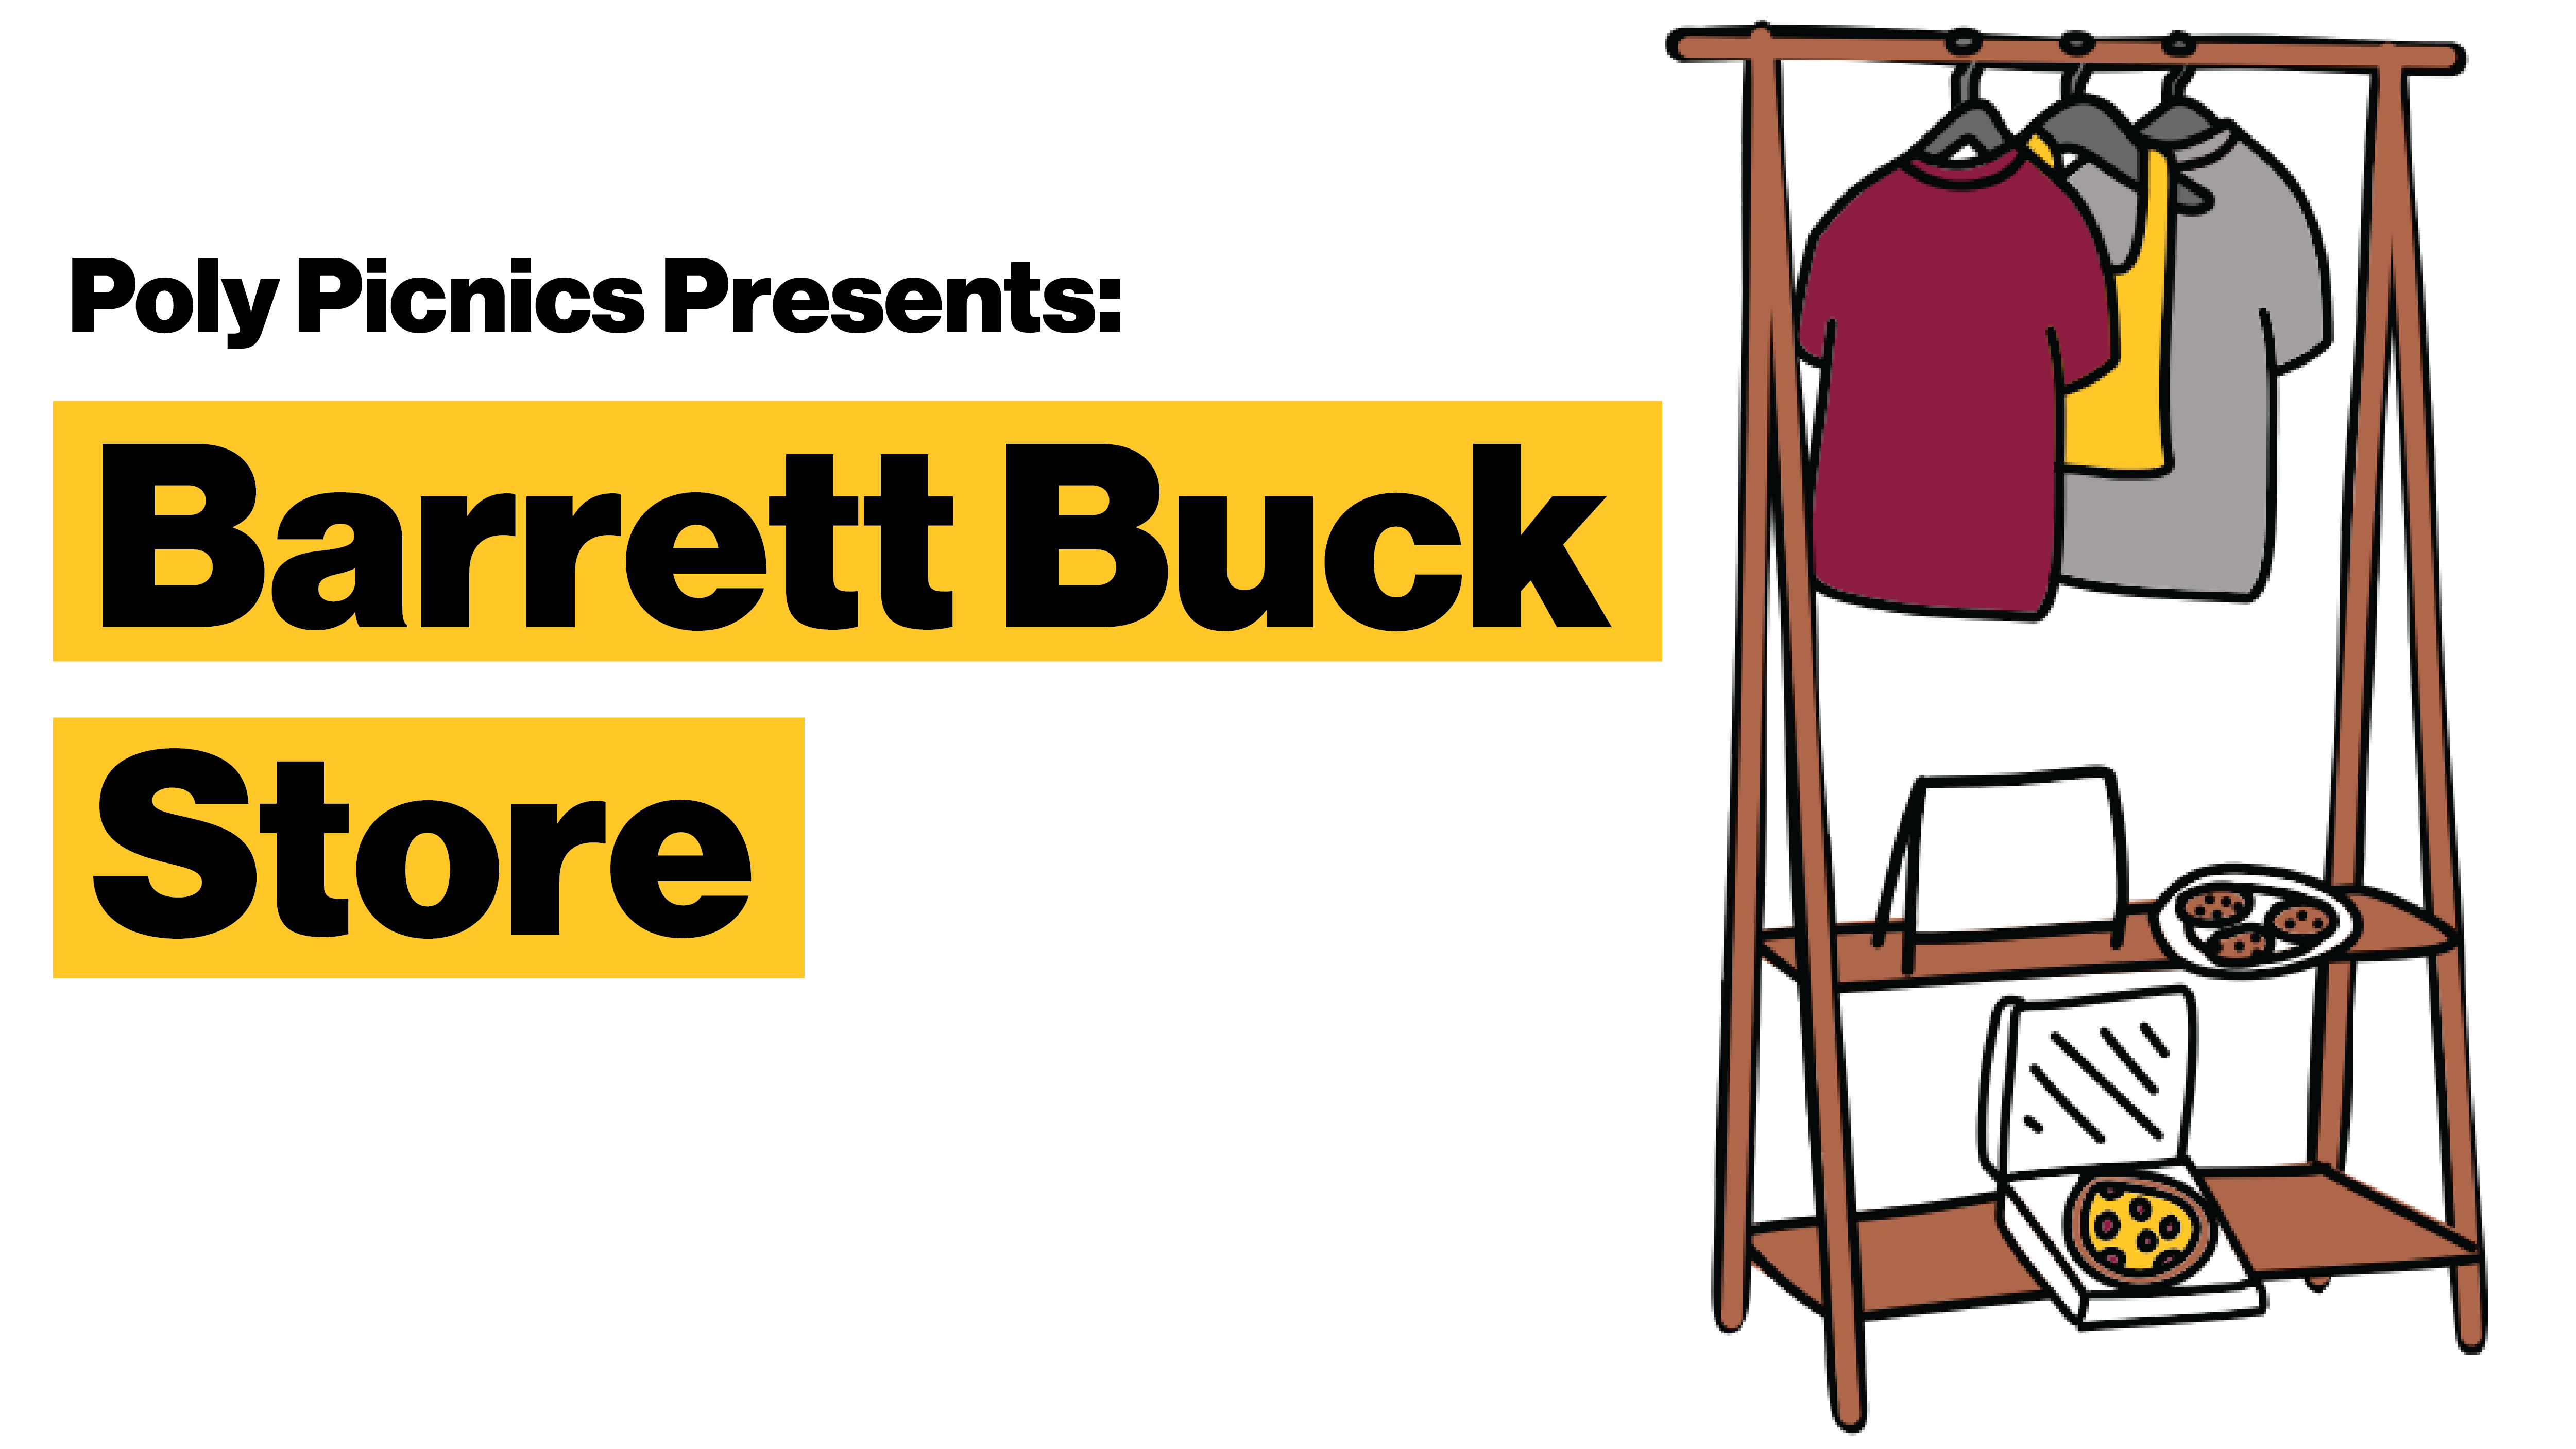 Poly Picnic presents: Barrett Buck Store